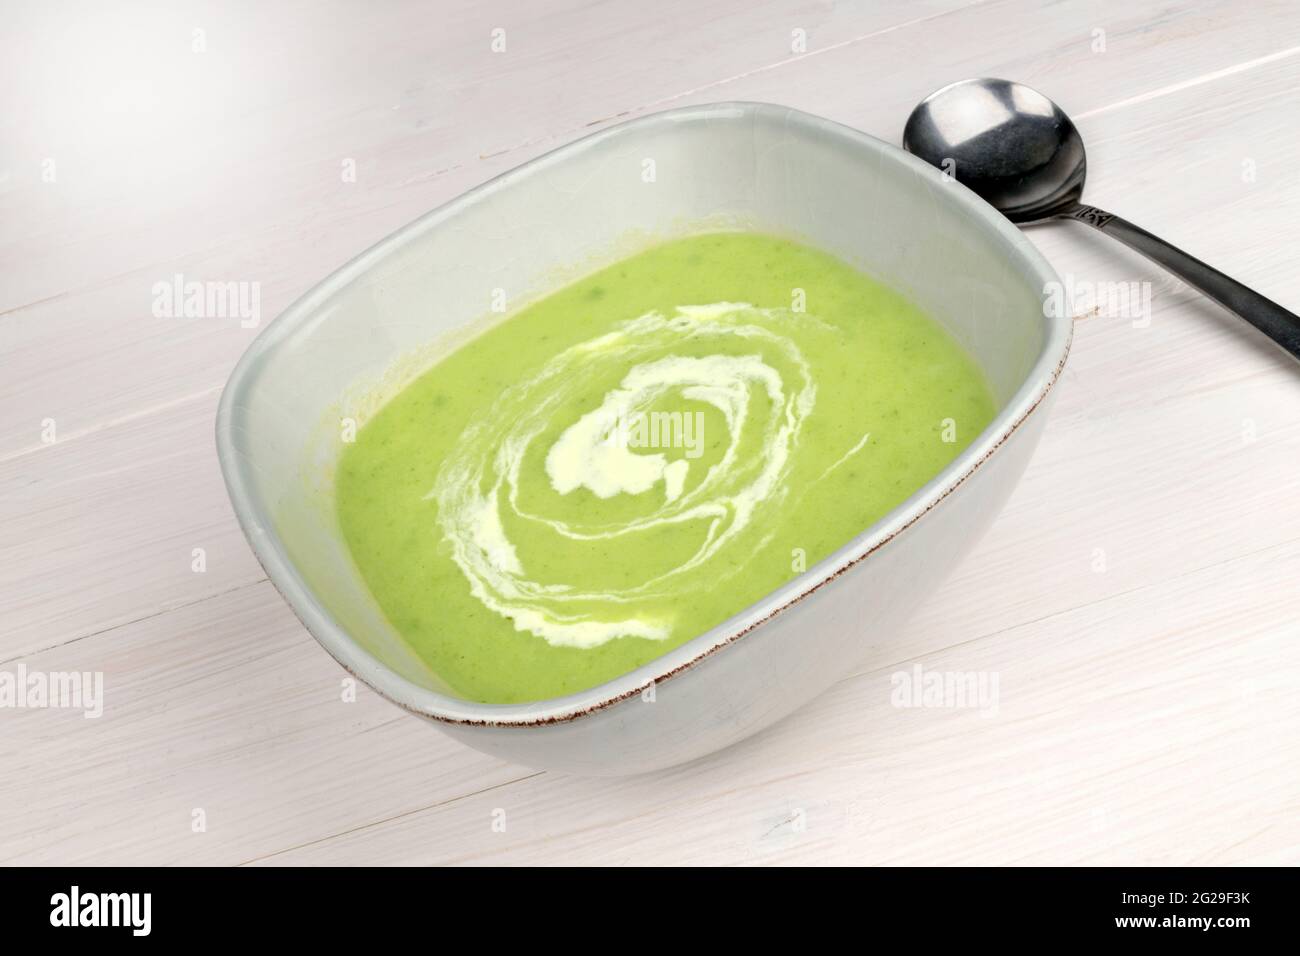 A bowl of Leek & Potato Soup on a white wooden table. Stock Photo